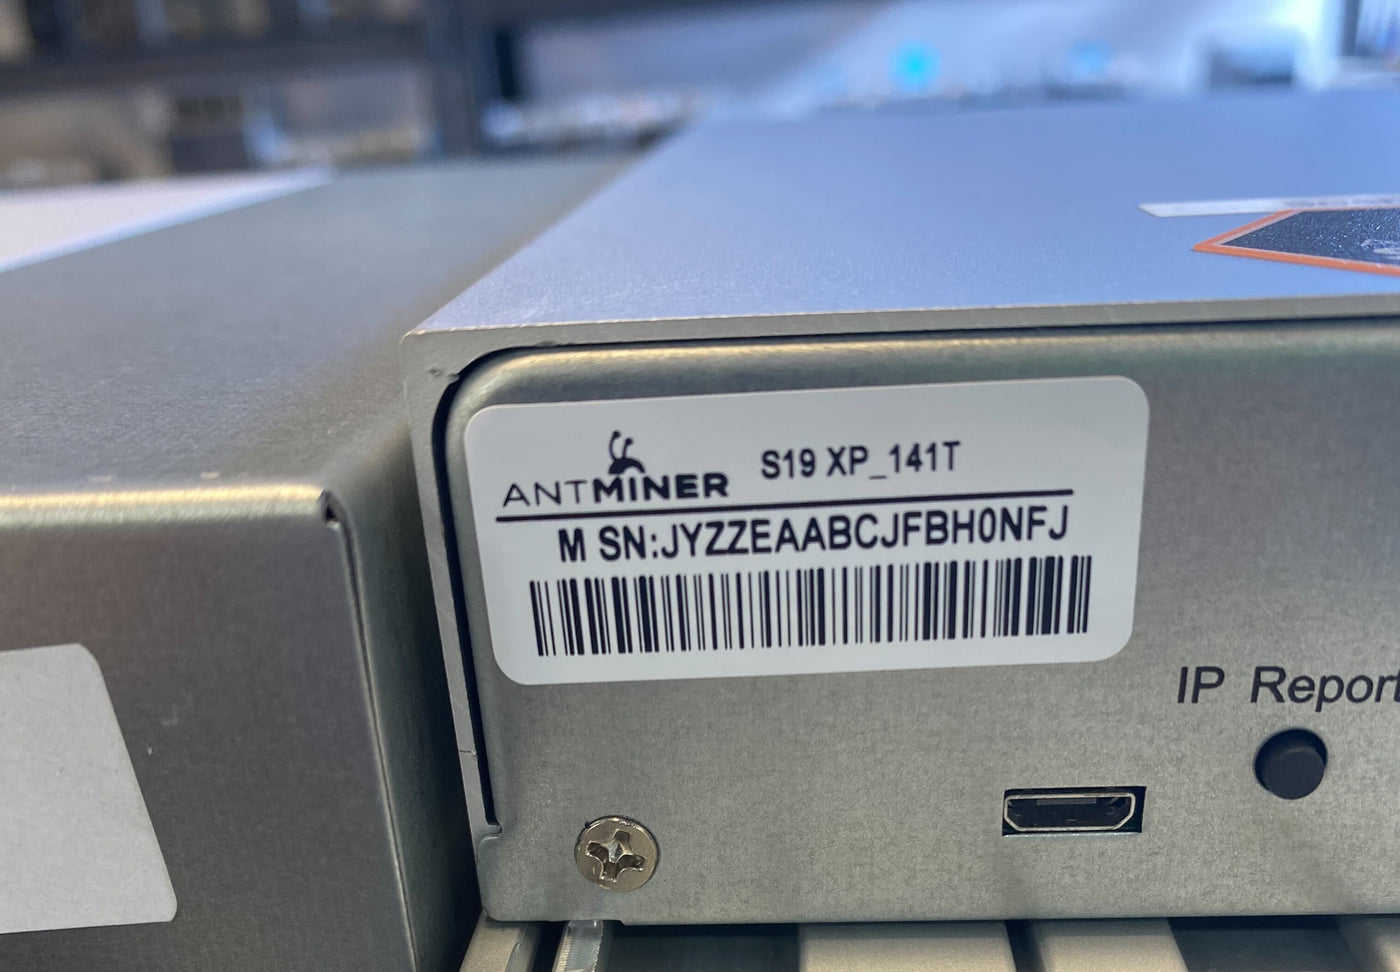 $.075 Hosting - Split Shares Beta - NEW Bitmain Antminer S19 XP 141 TH/s - Serial # JYZZEAABCJFBH0NFJ